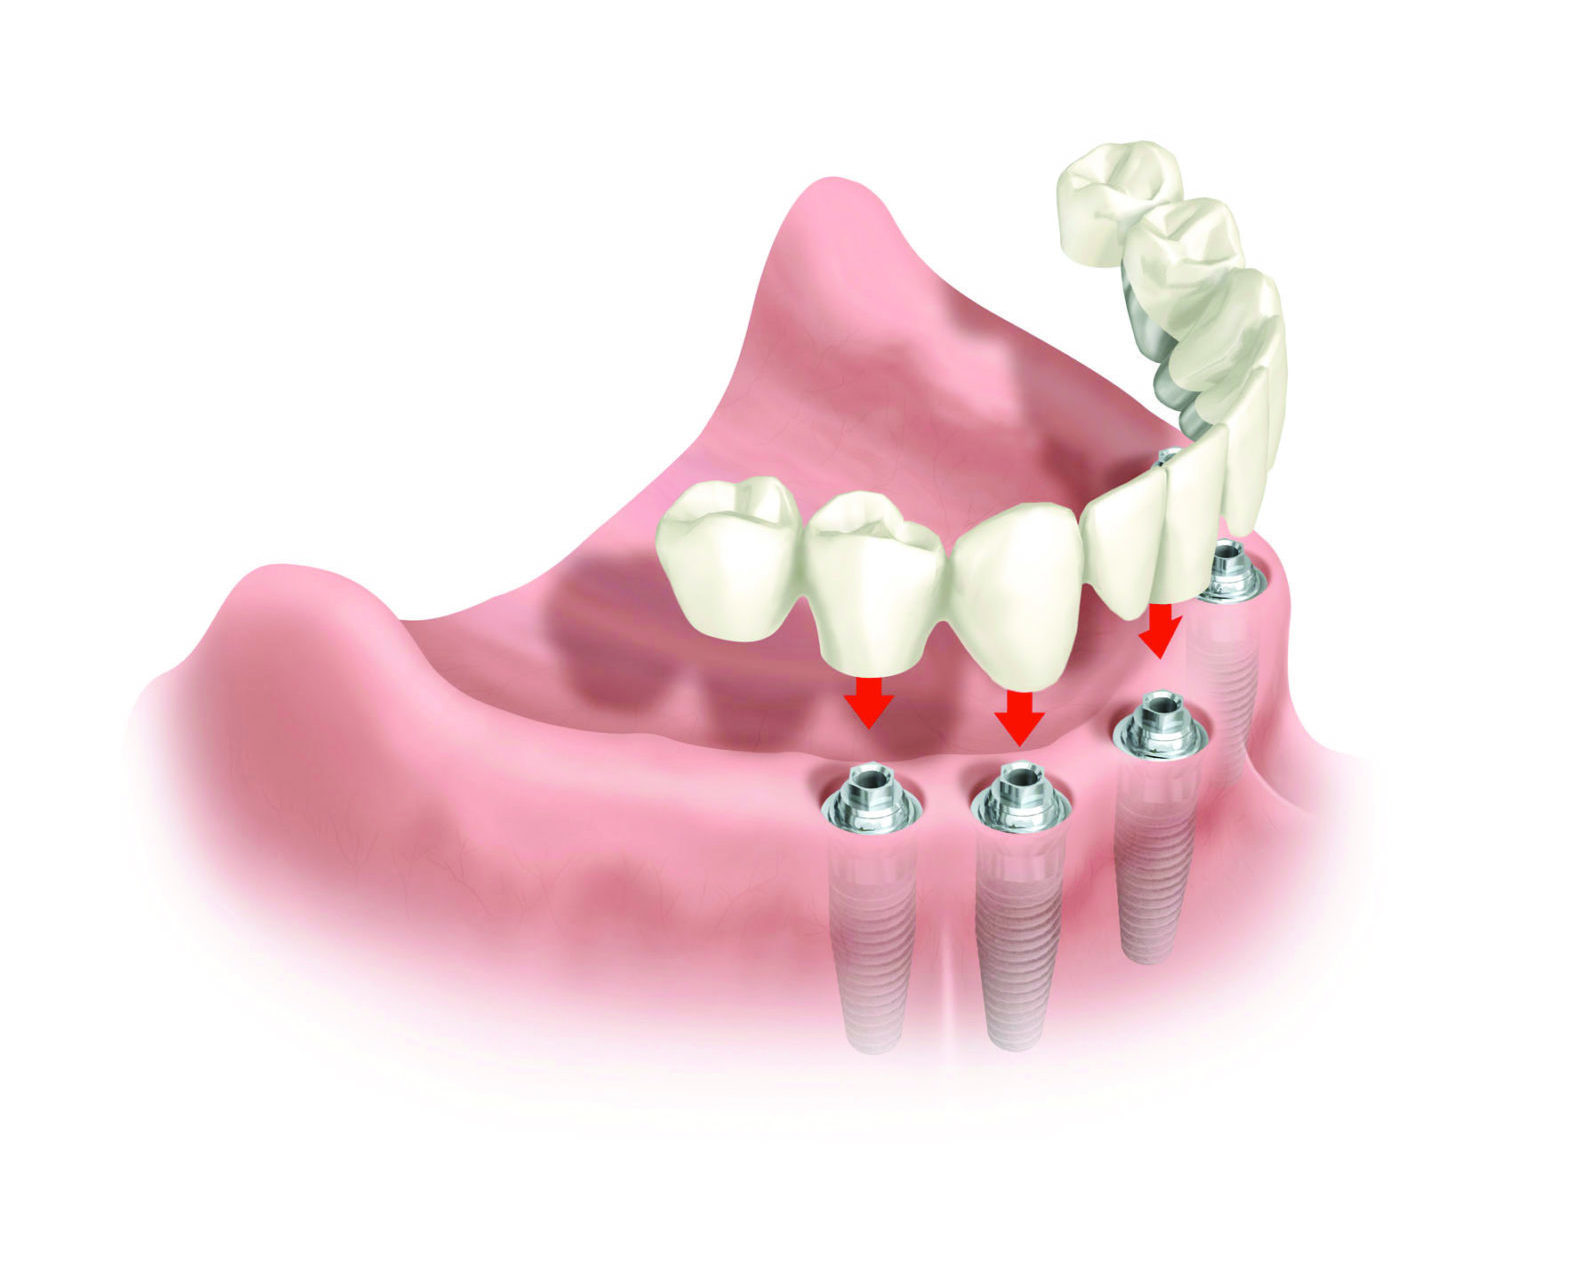 All on four dental implants